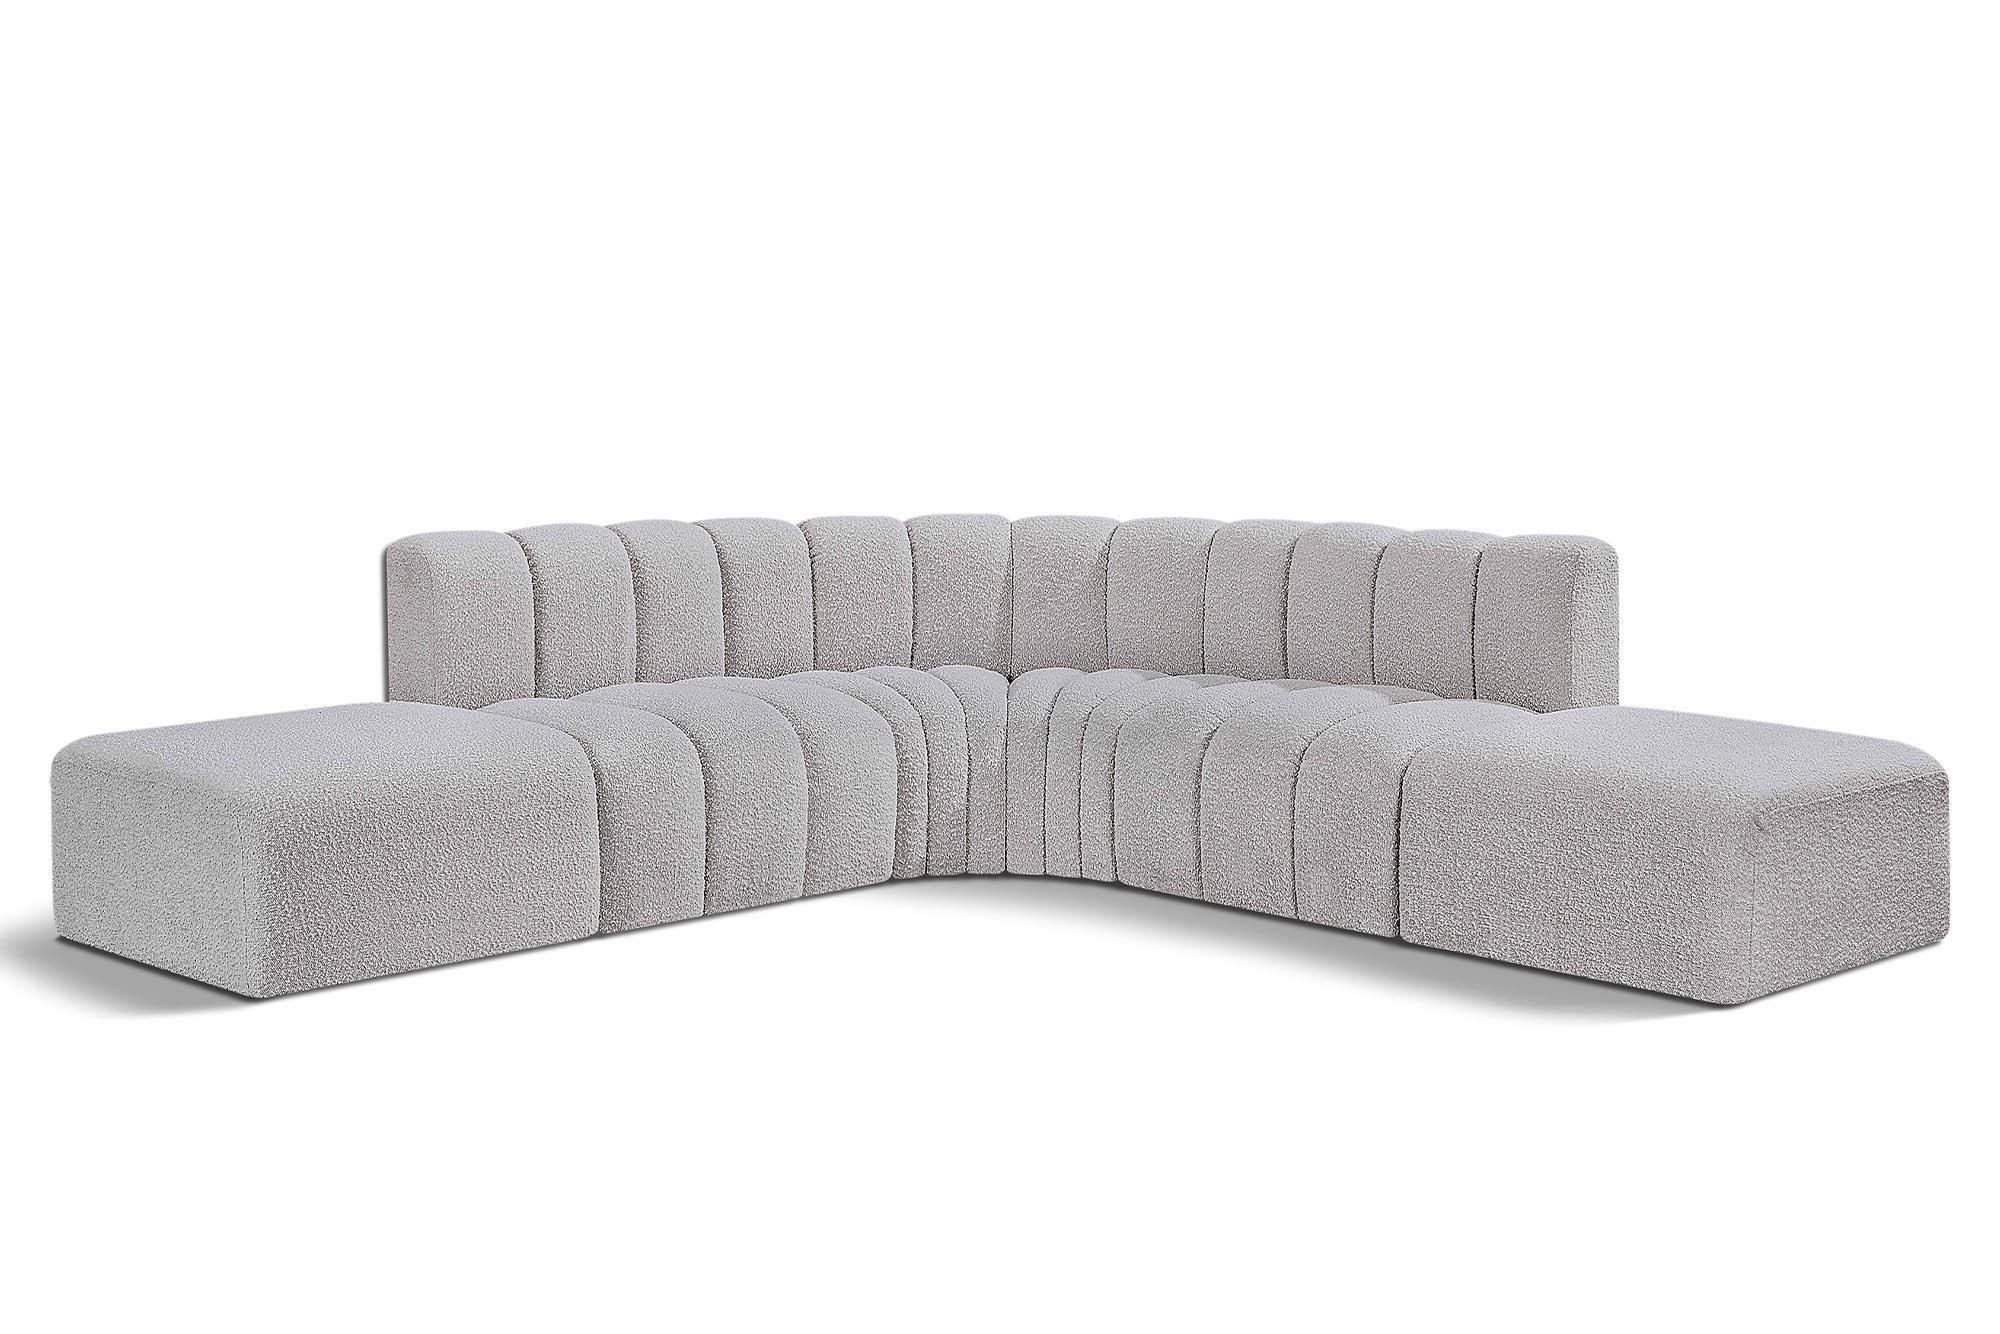 Contemporary, Modern Modular Sectional Sofa ARC 102Grey-S6C 102Grey-S6C in Gray 